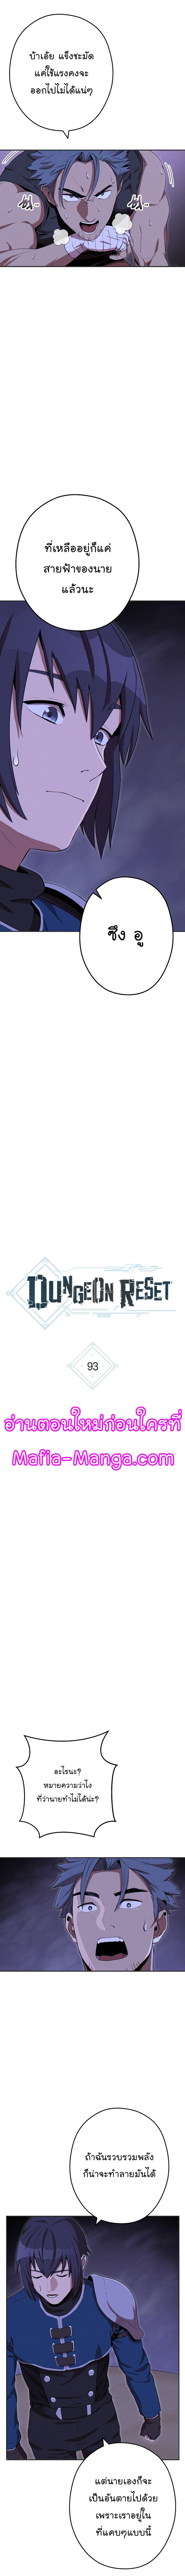 Dungeon Reset93 02